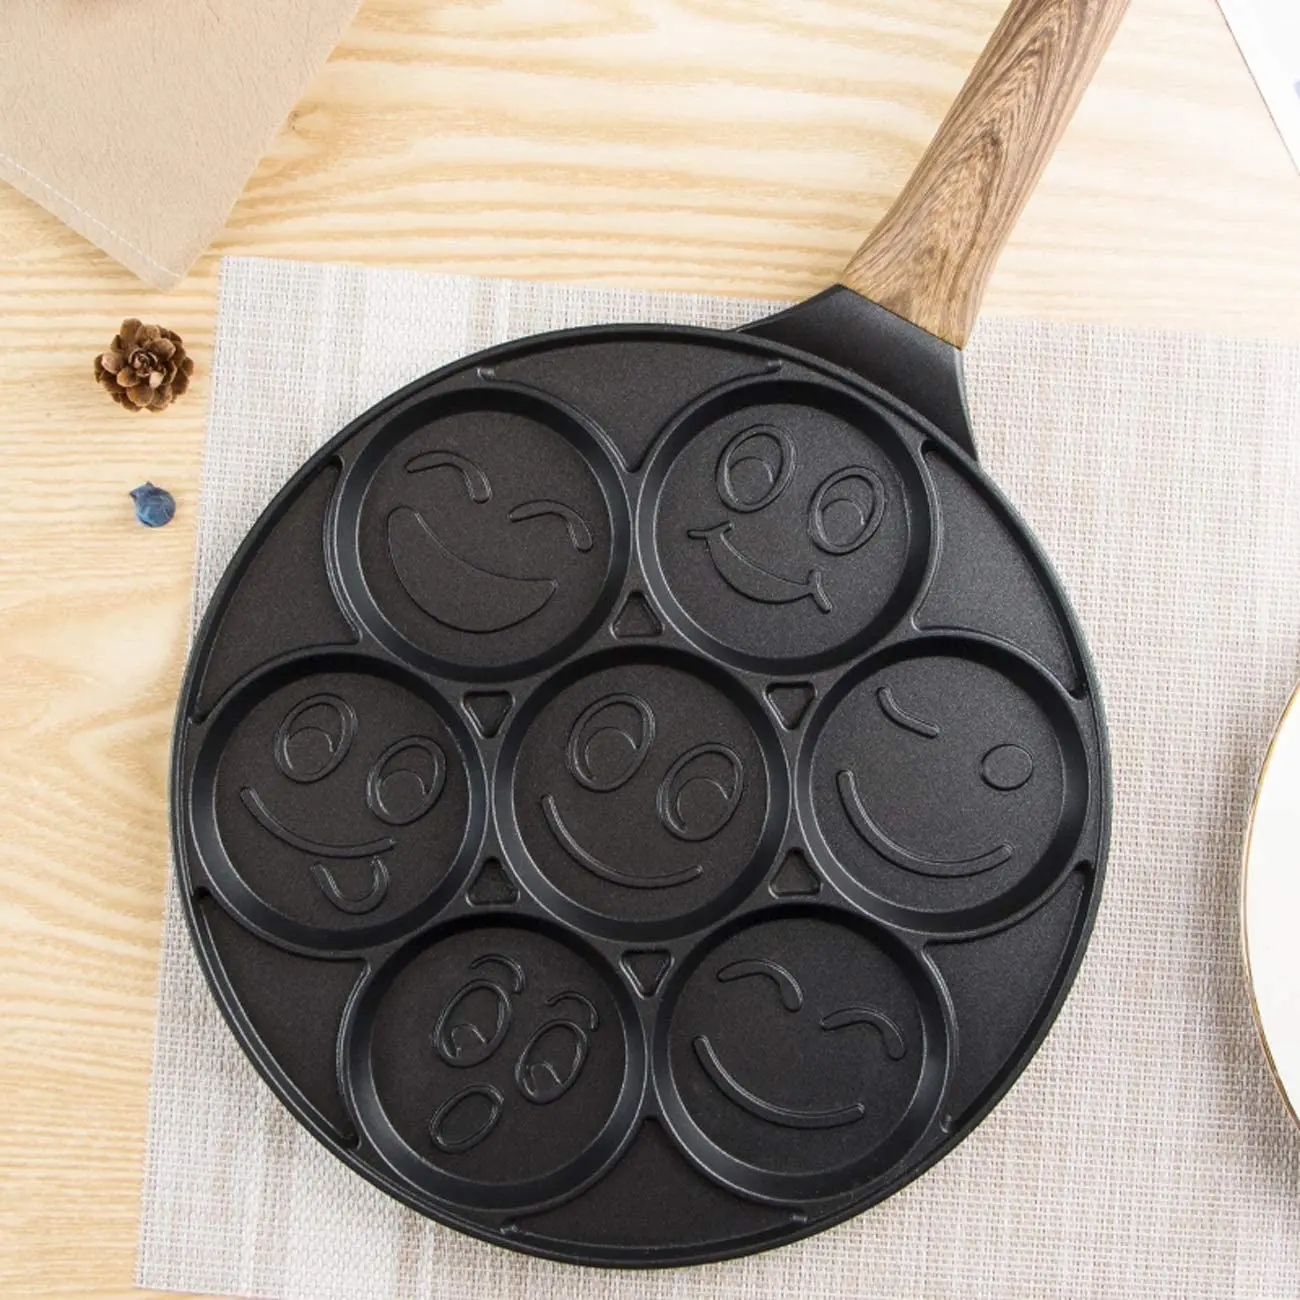 Emoji Smiley Face Pancake Pan - Non-stick Pan Cake Griddle with 7 Unique  Flapjax